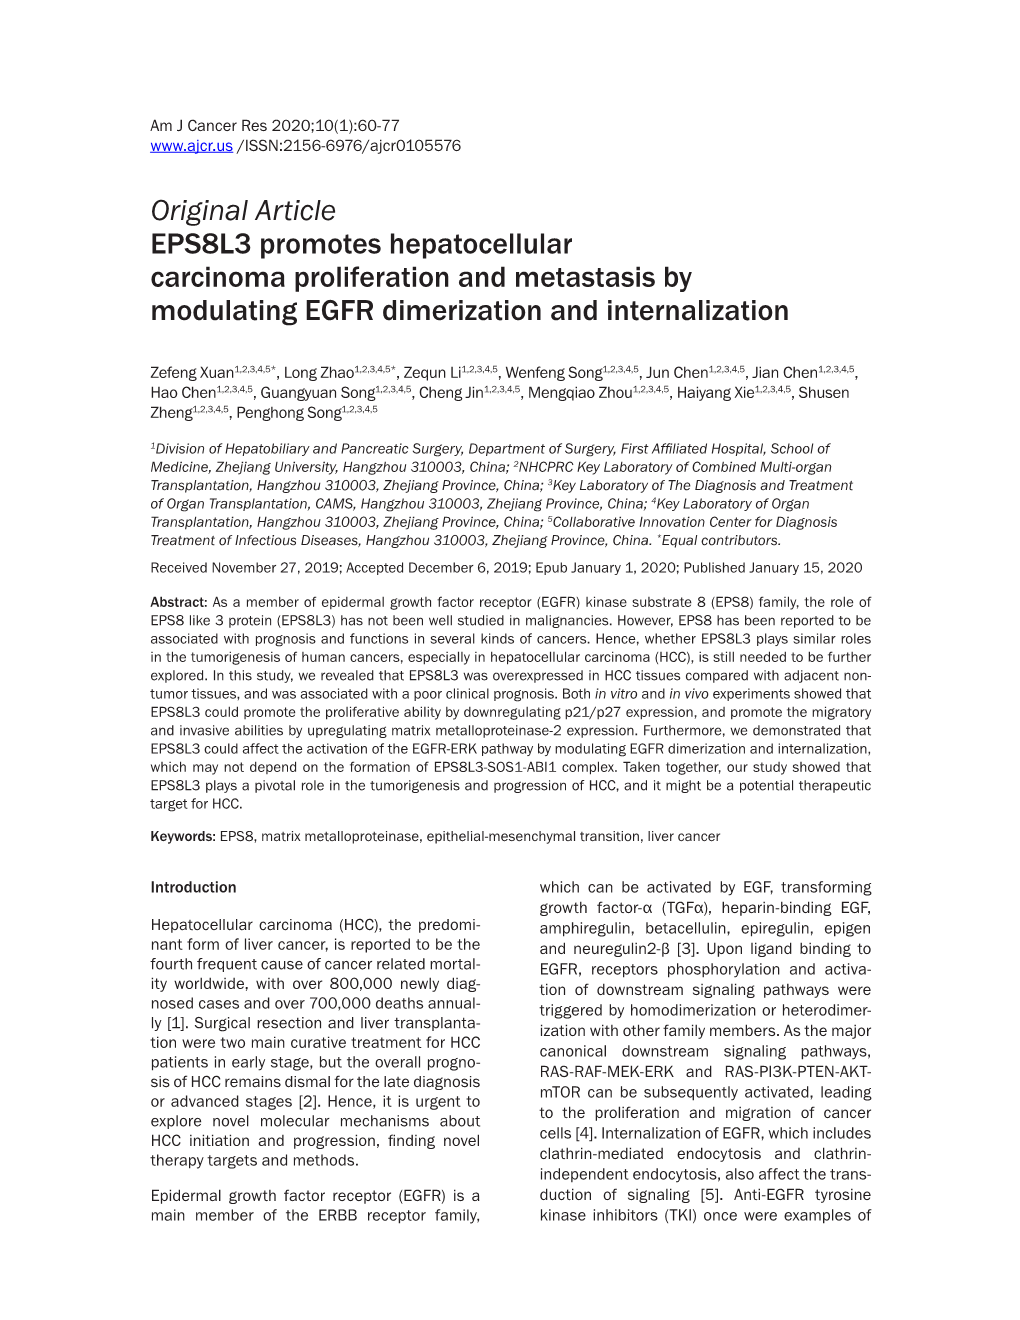 Original Article EPS8L3 Promotes Hepatocellular Carcinoma Proliferation and Metastasis by Modulating EGFR Dimerization and Internalization